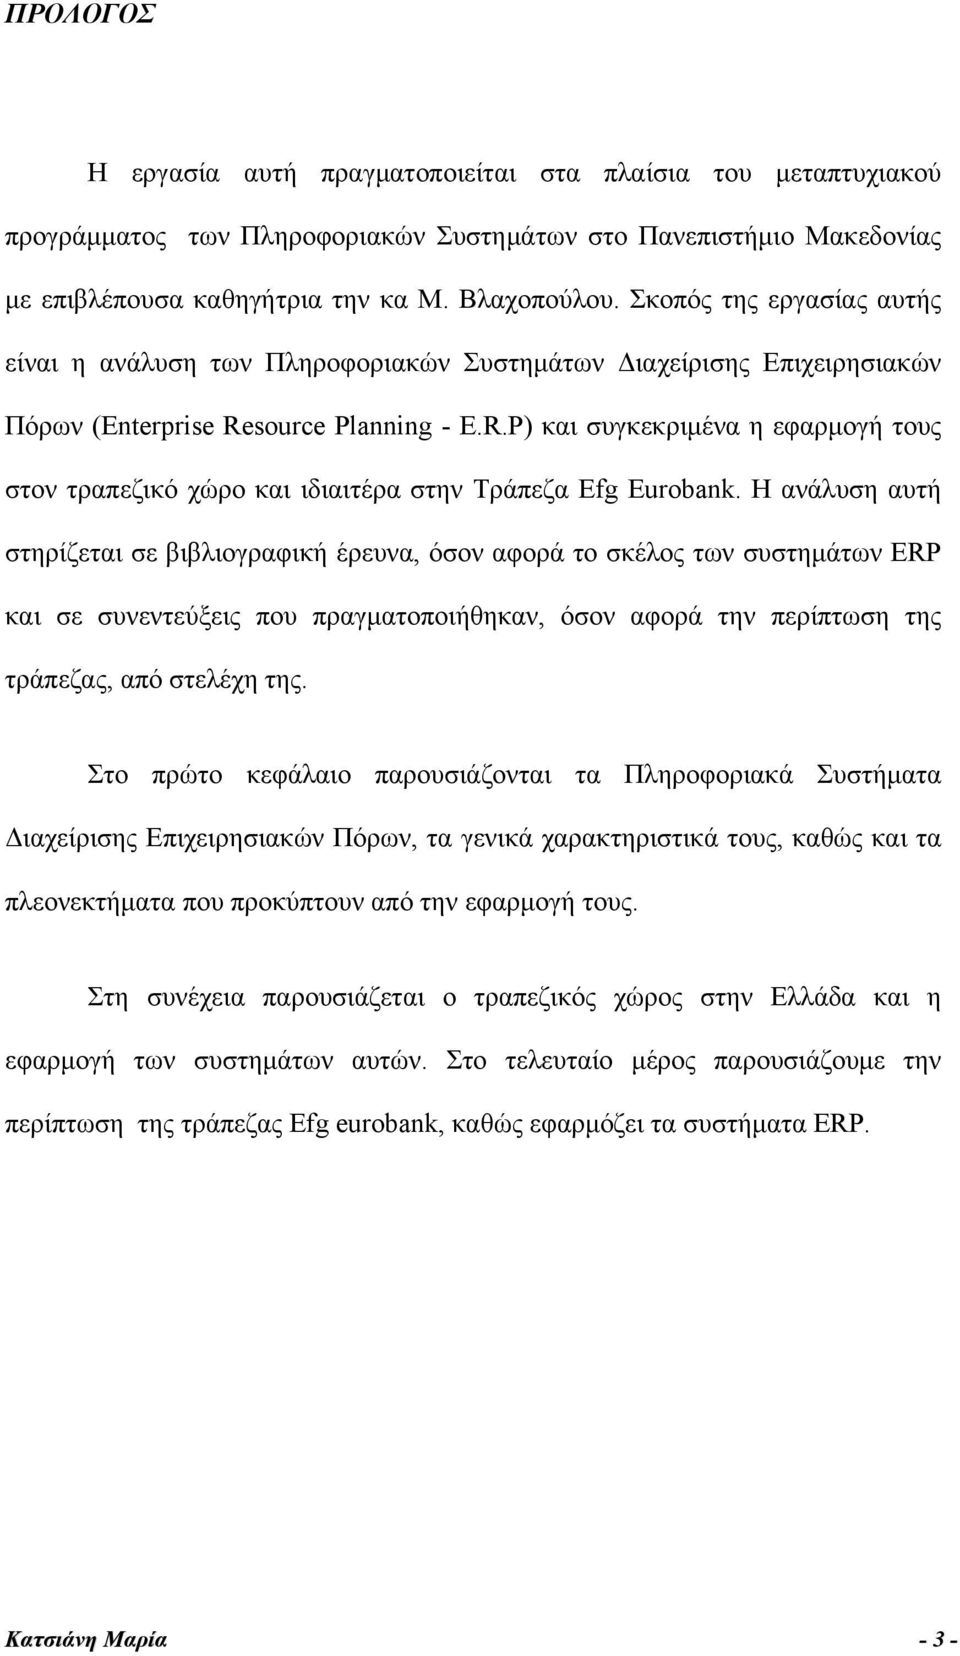 source Planning - E.R.P) και συγκεκριμένα η εφαρμογή τους στον τραπεζικό χώρο και ιδιαιτέρα στην Τράπεζα Efg Eurobank.